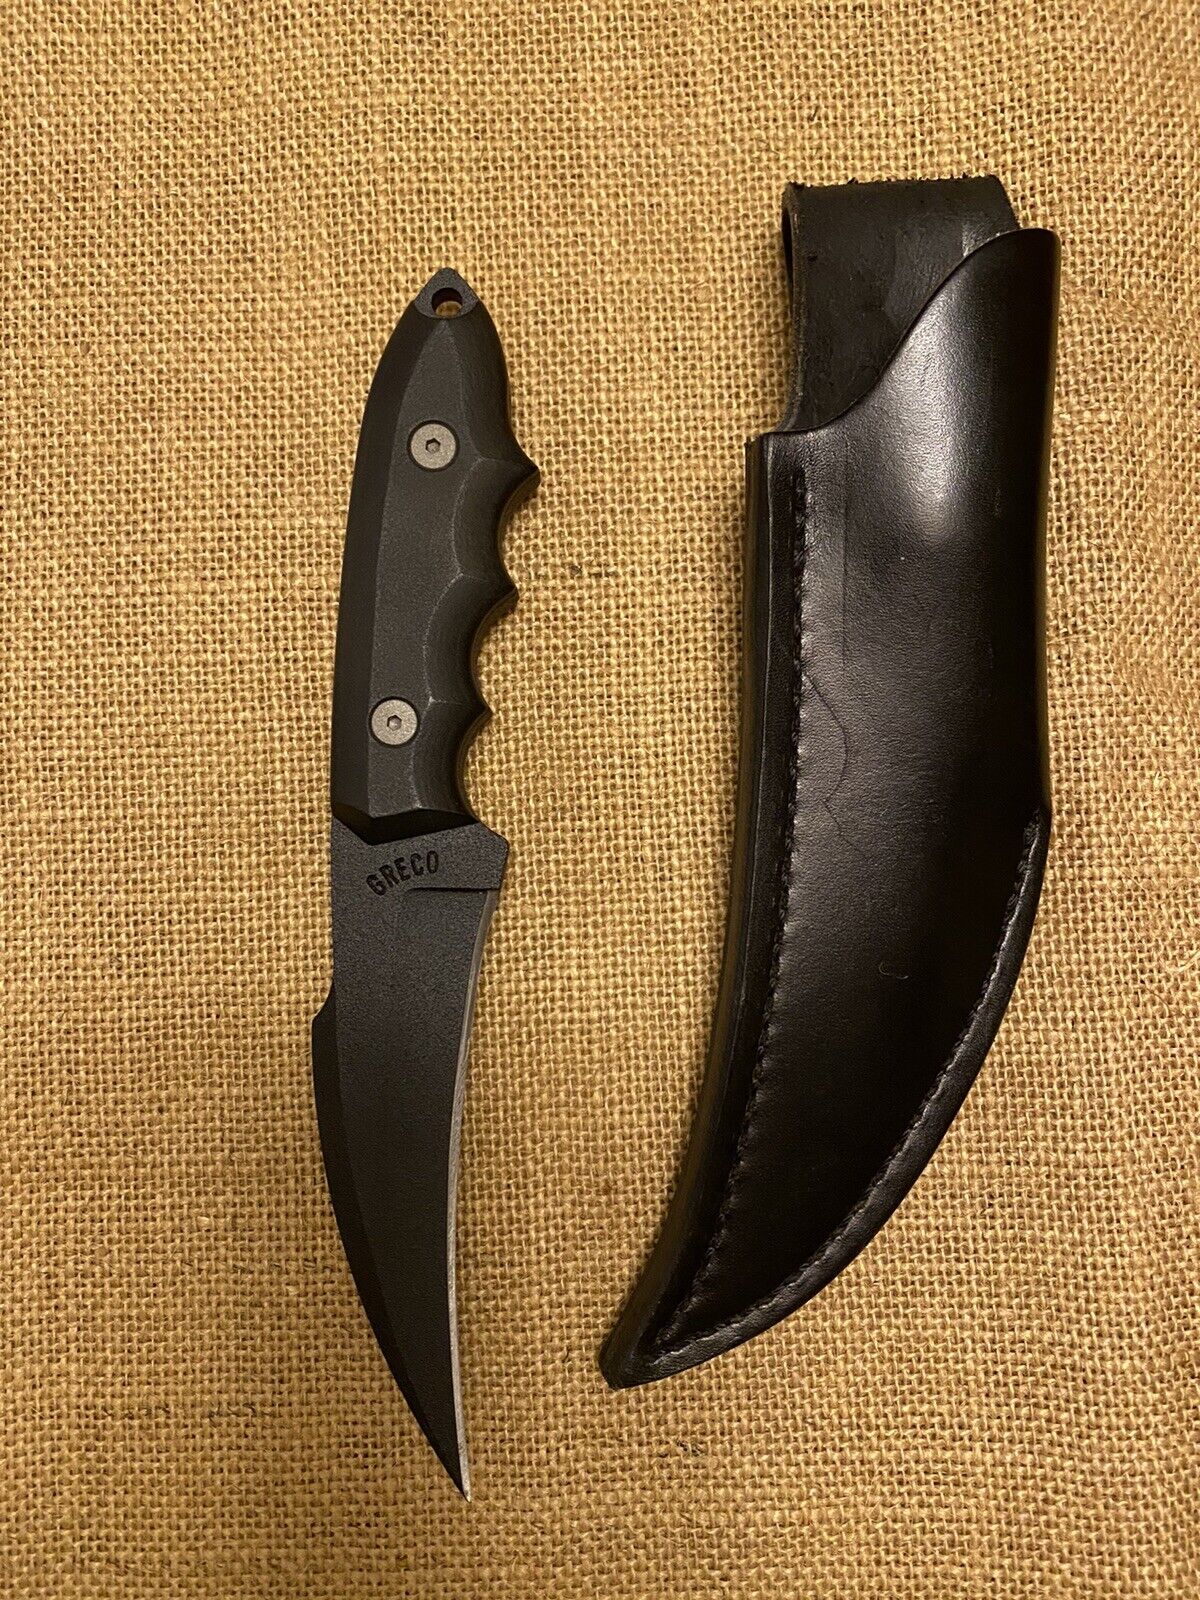 Custom made John Greco prototype LA SWAT knife